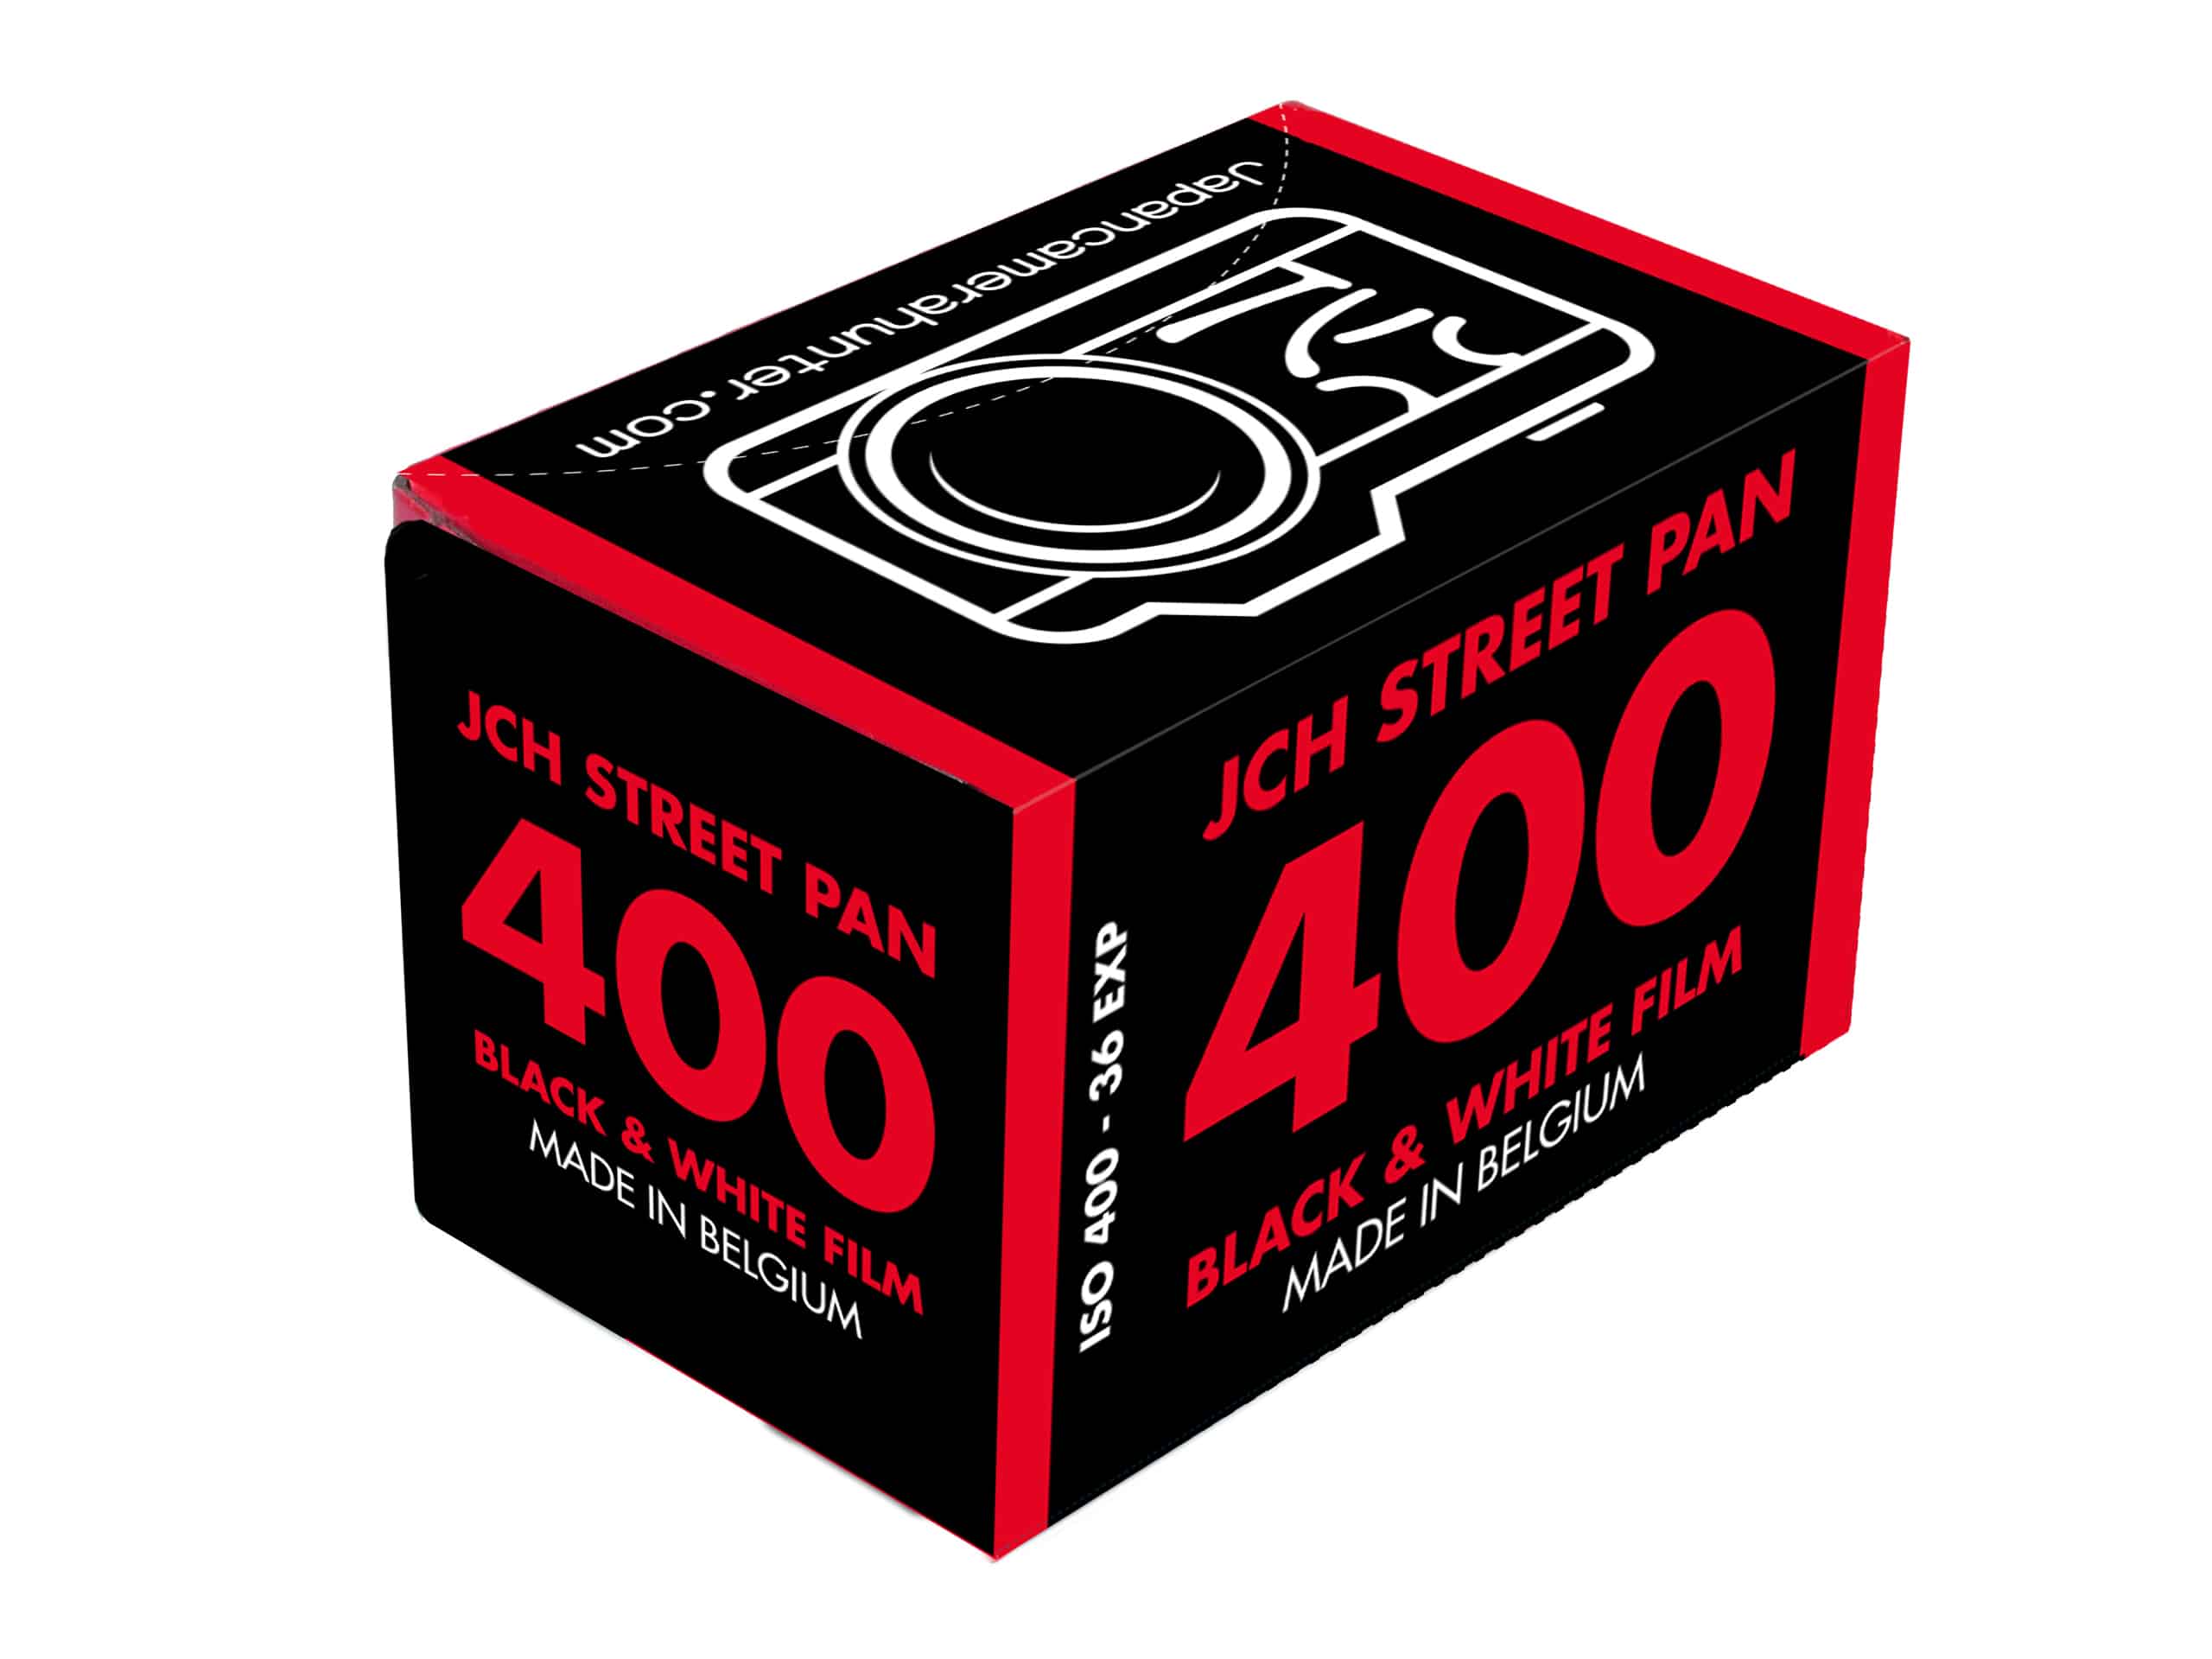 Film News: Announcing JCH StreetPan 400 film!